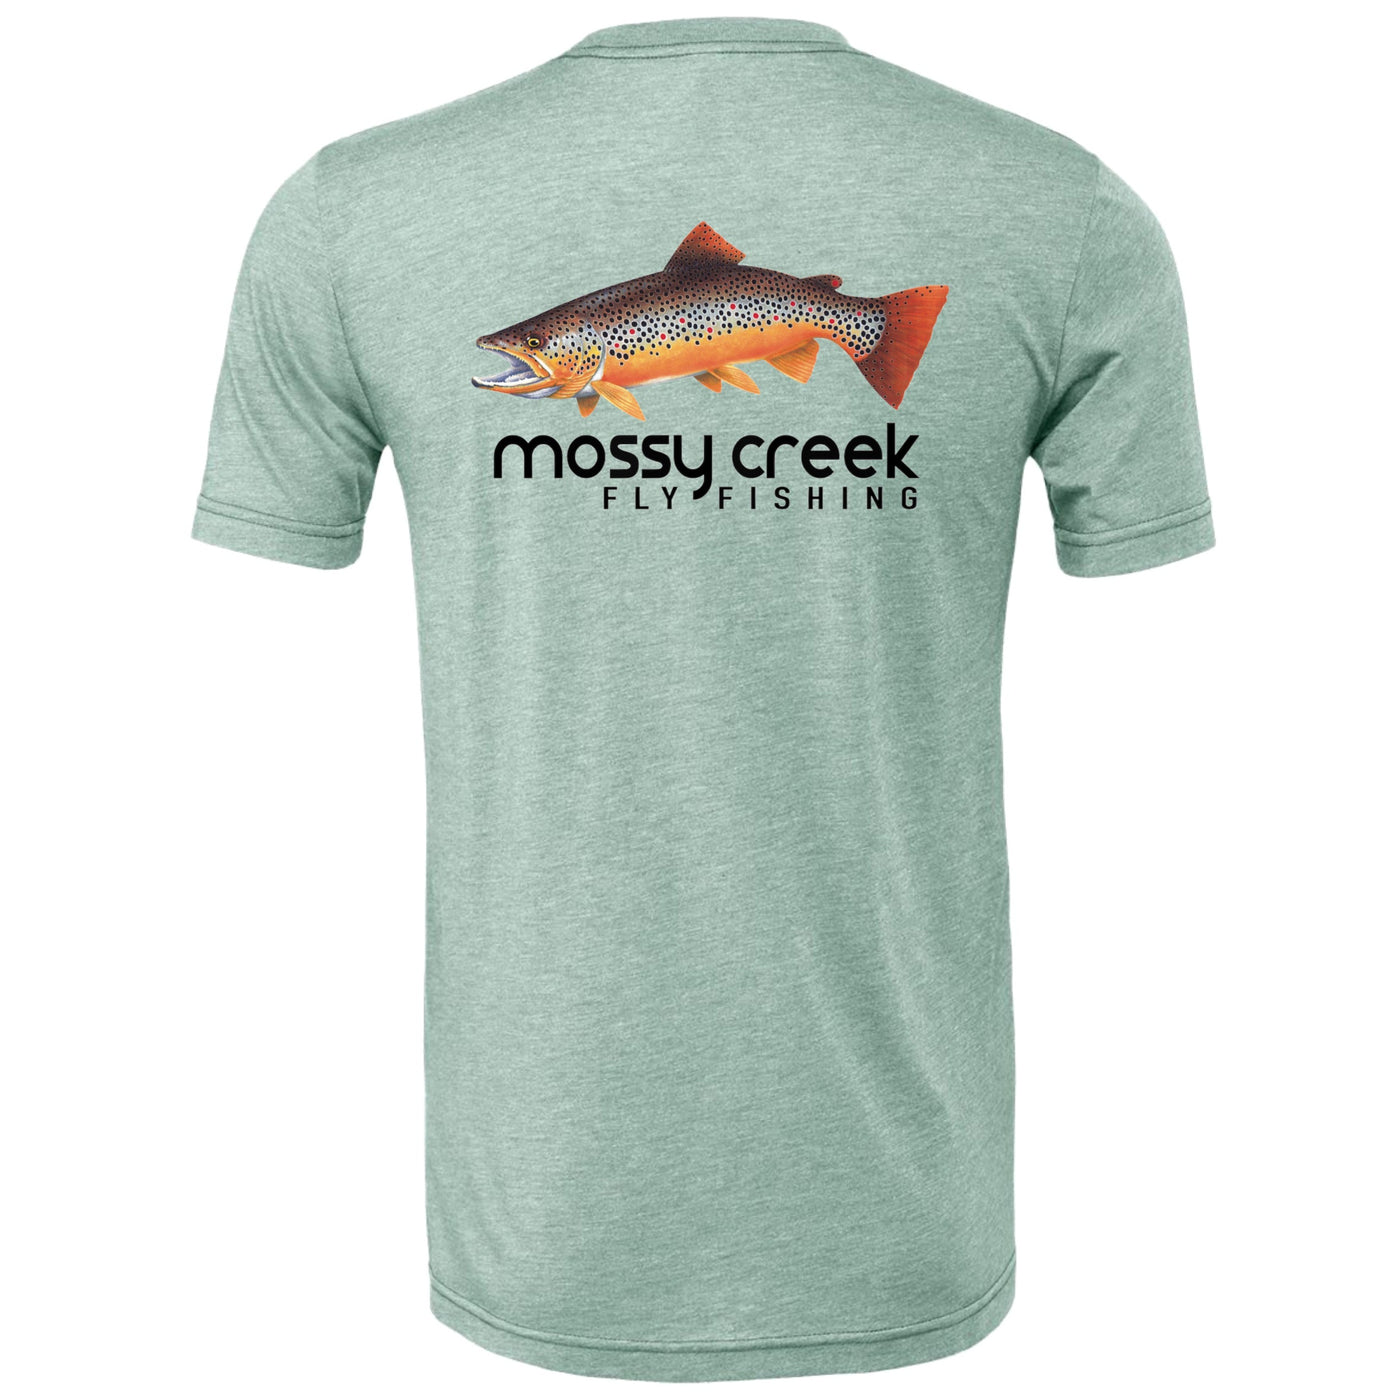 Stay Fly T-Shirts, Trout T-Shirts, Fishing T-Shirts